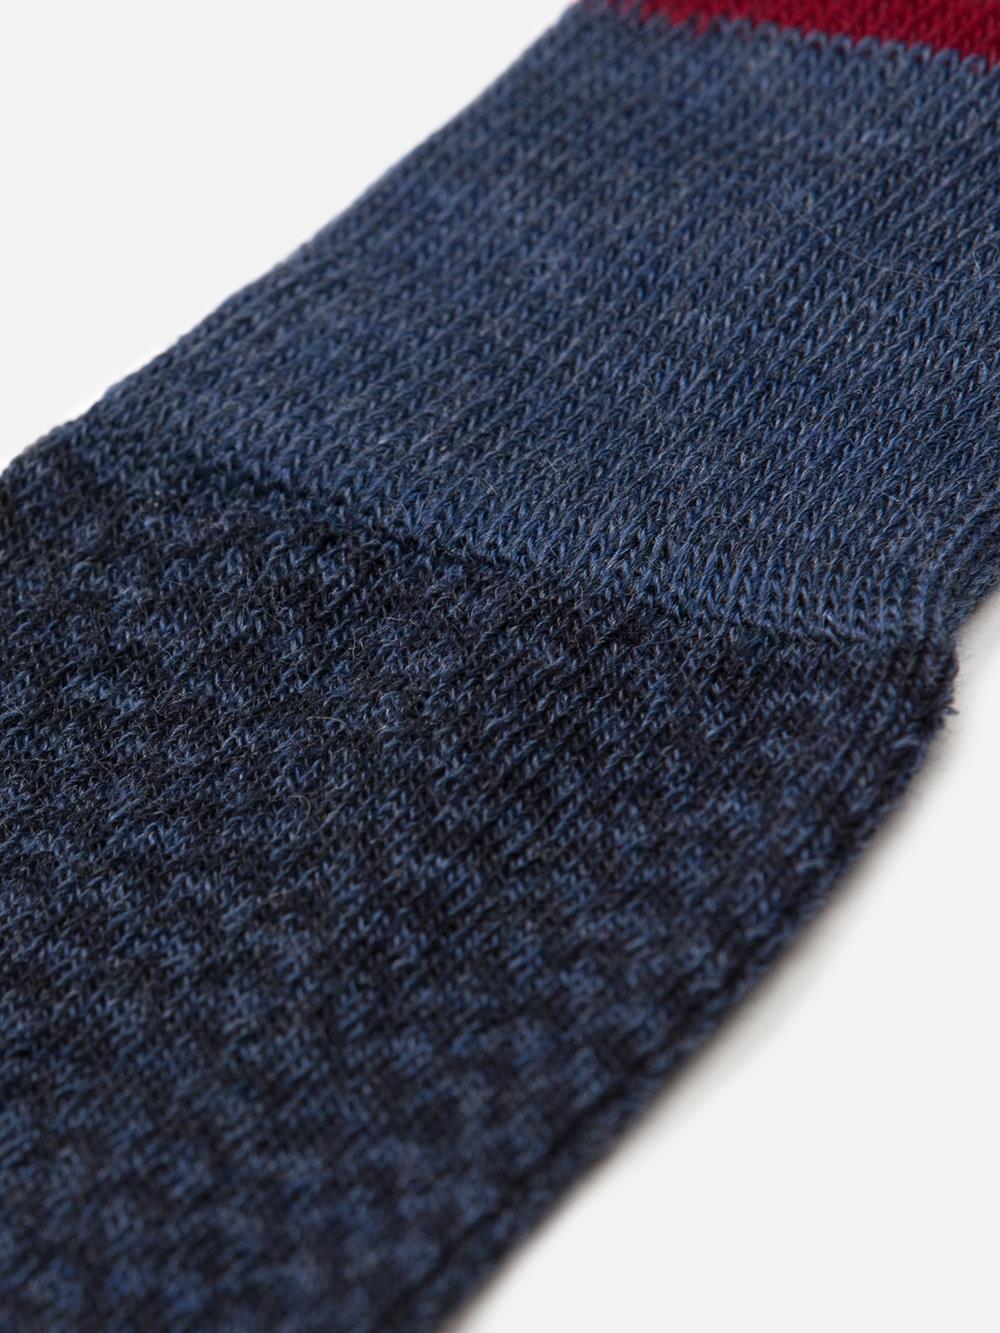 Bauer socks in blue herringbone pattern